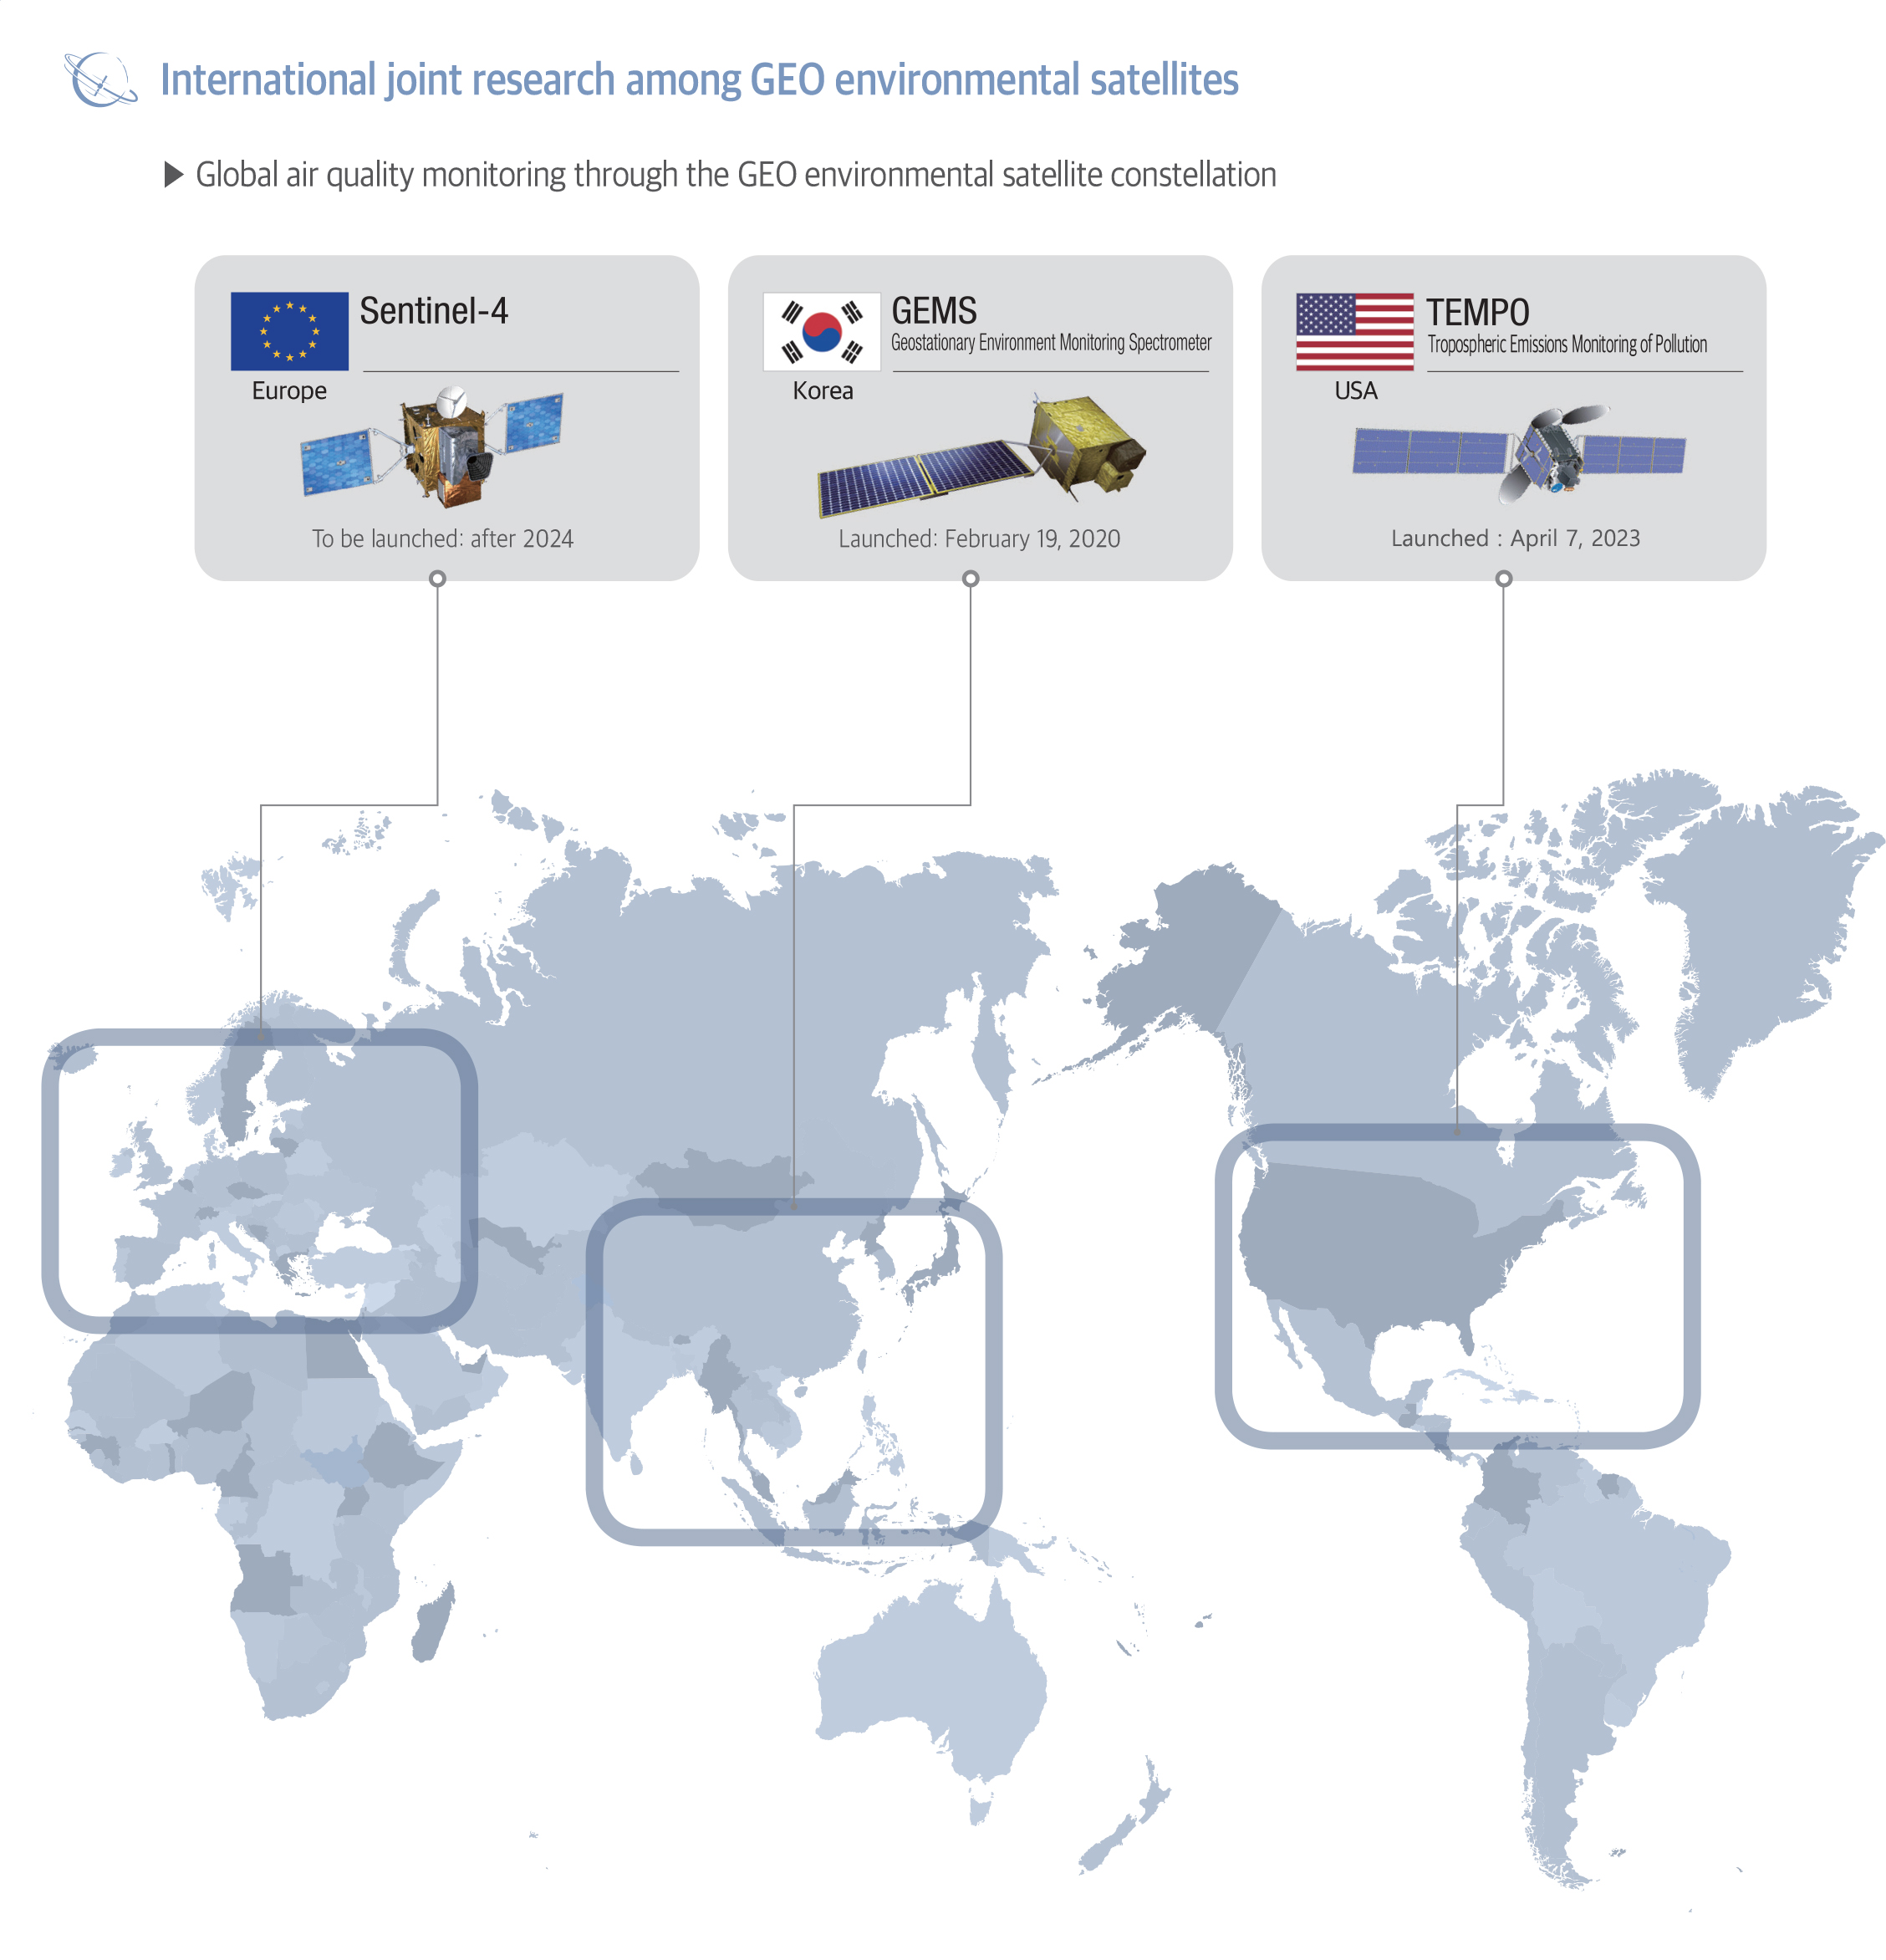 Global air quality monitoring through the environmental satellite constellation